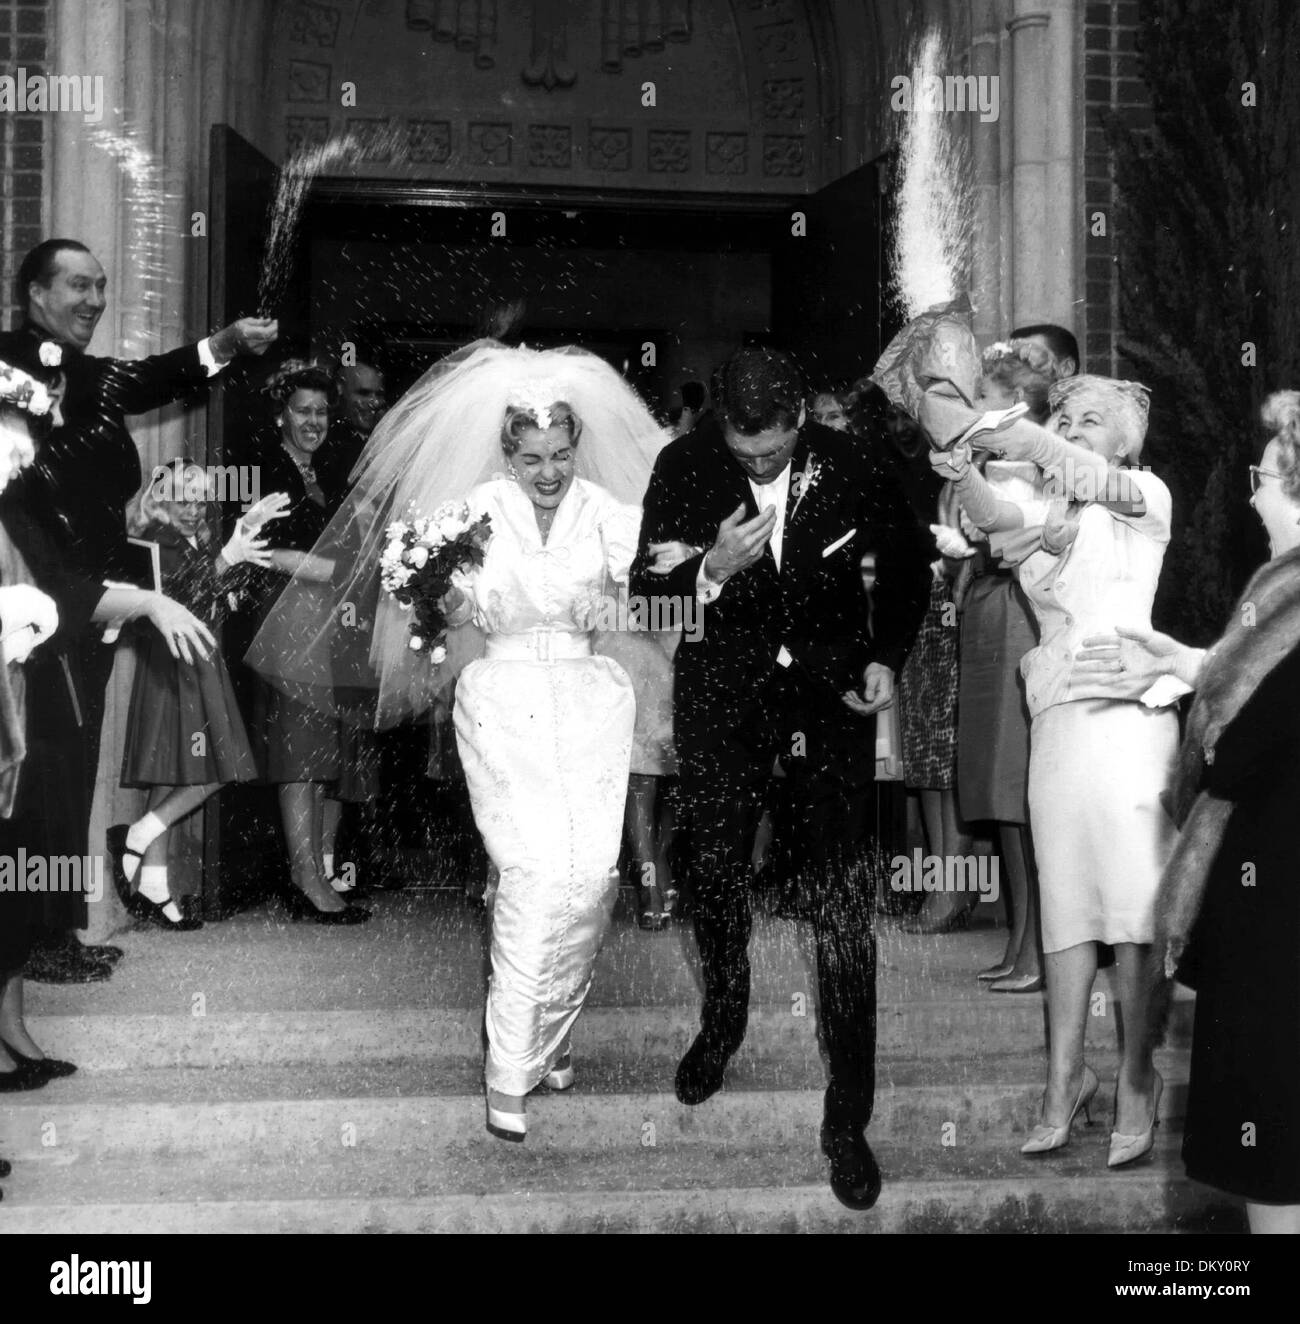 Avril 18, 2000 - LORI NELSON ET JOHNNIE MARIAGE MANN.Â©NATE CUTLER/(Image Crédit : © Globe Photos/ZUMAPRESS.com) Banque D'Images